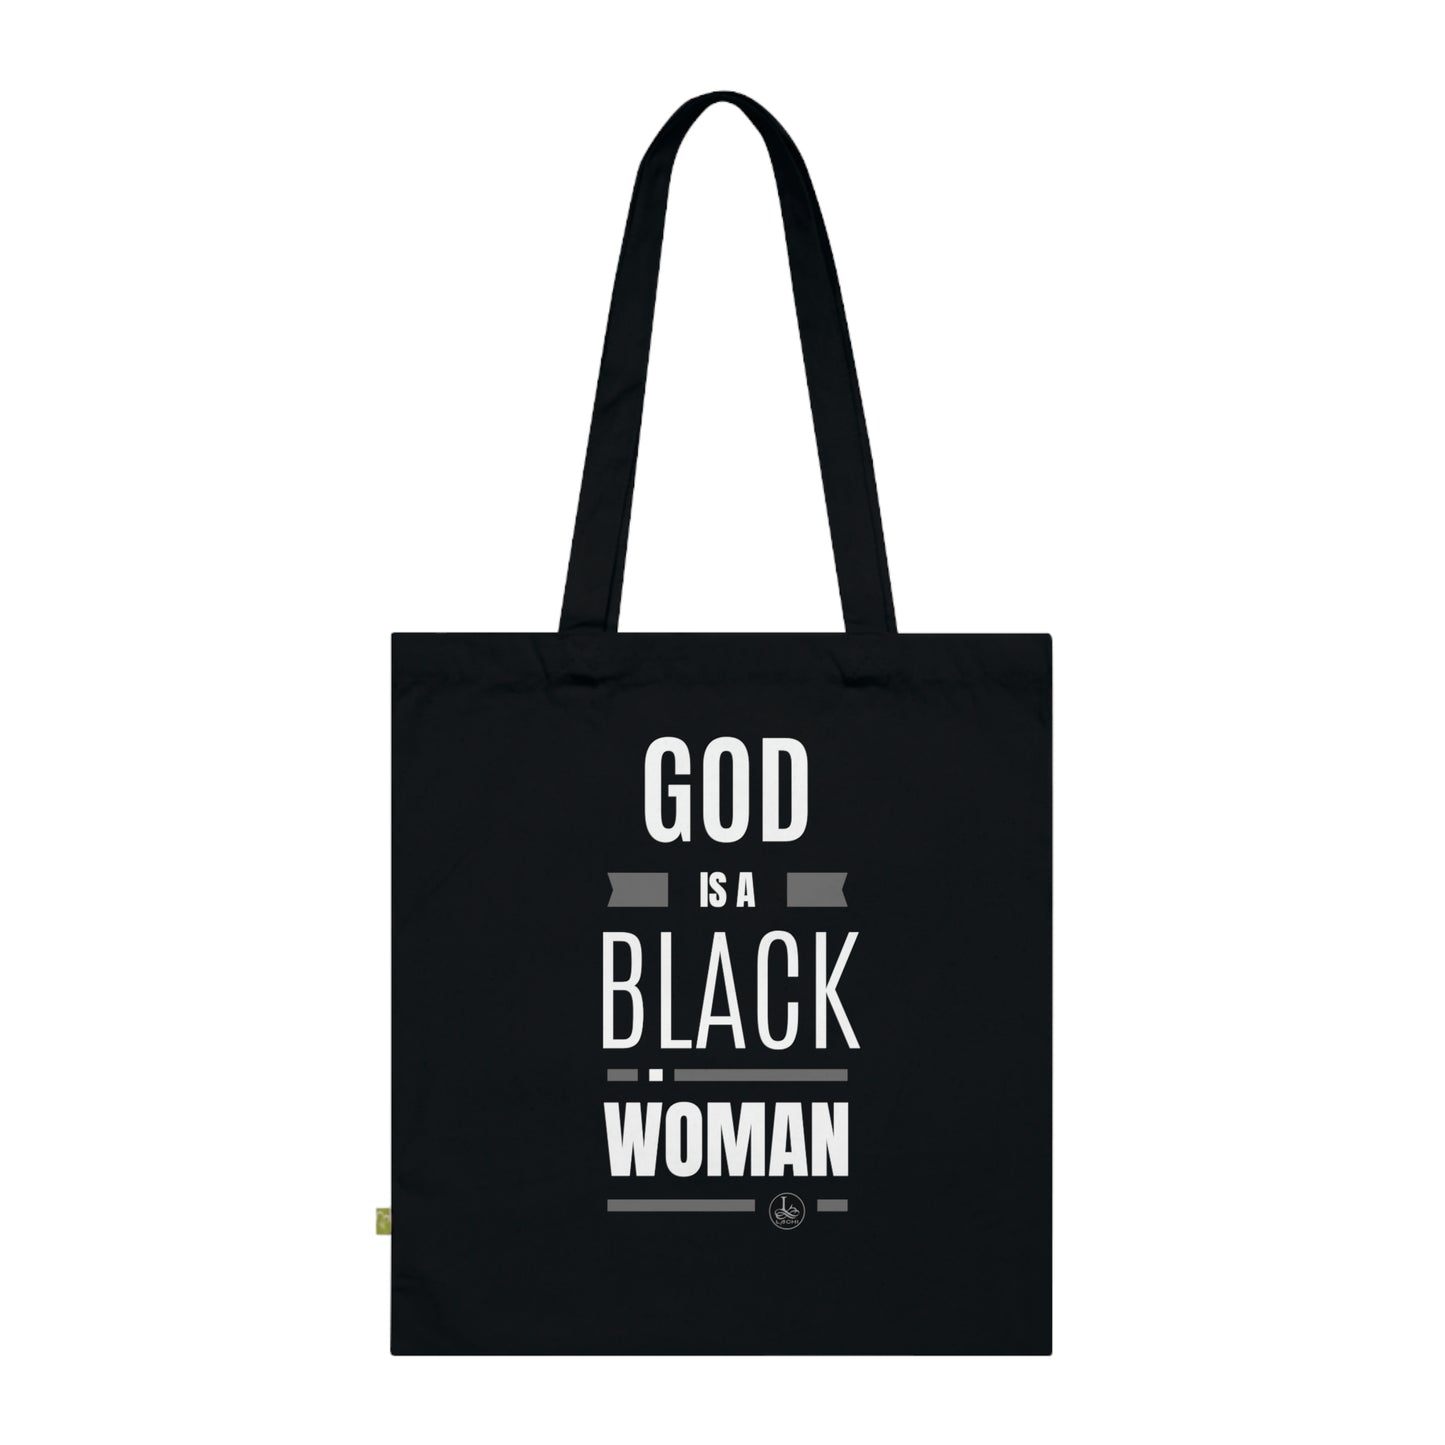 God is a black woman - Organic Cotton Tote Bag